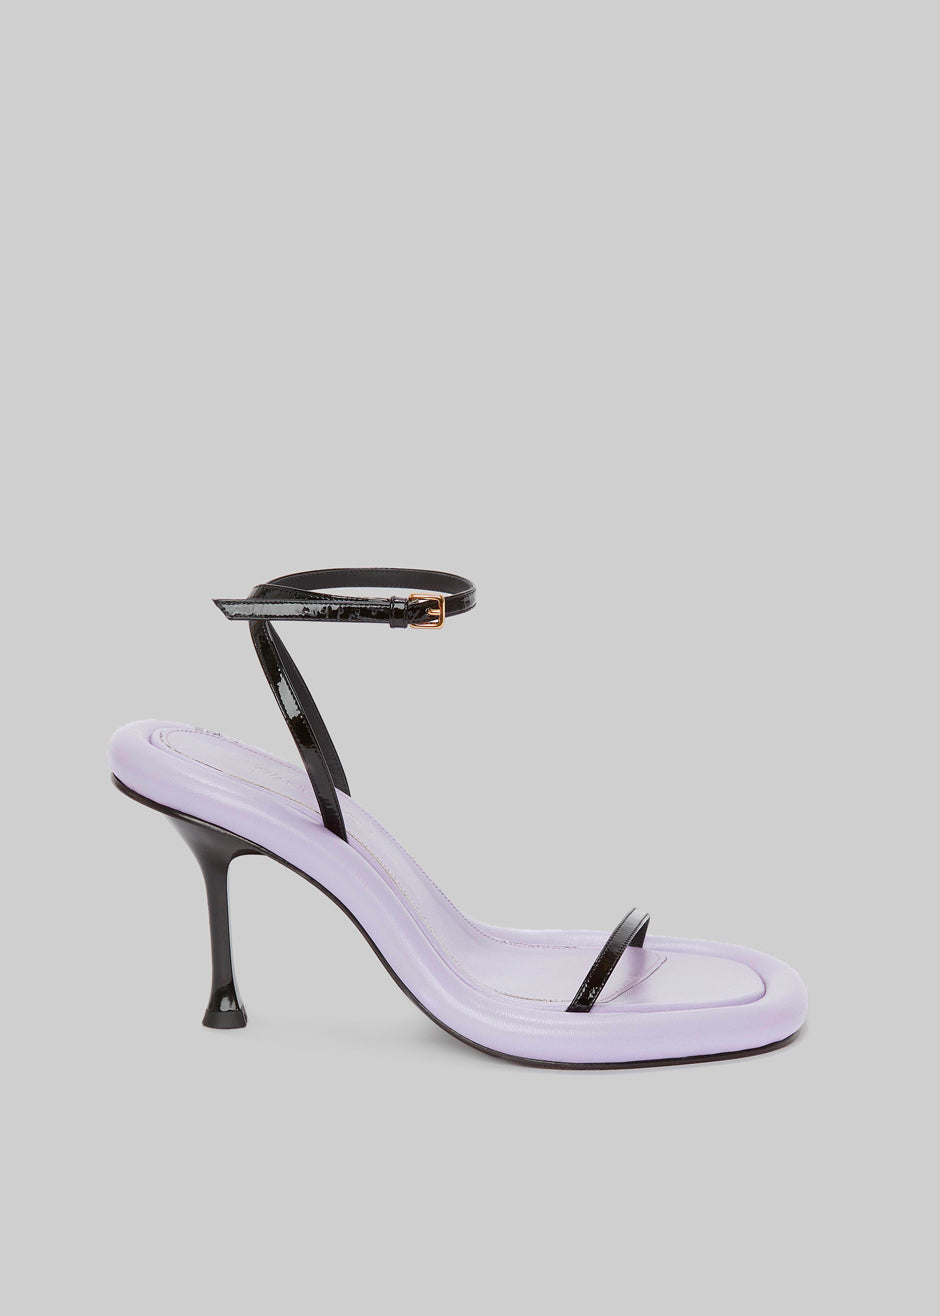 JW Anderson Bumper Heel Sandal - Lilac/Black